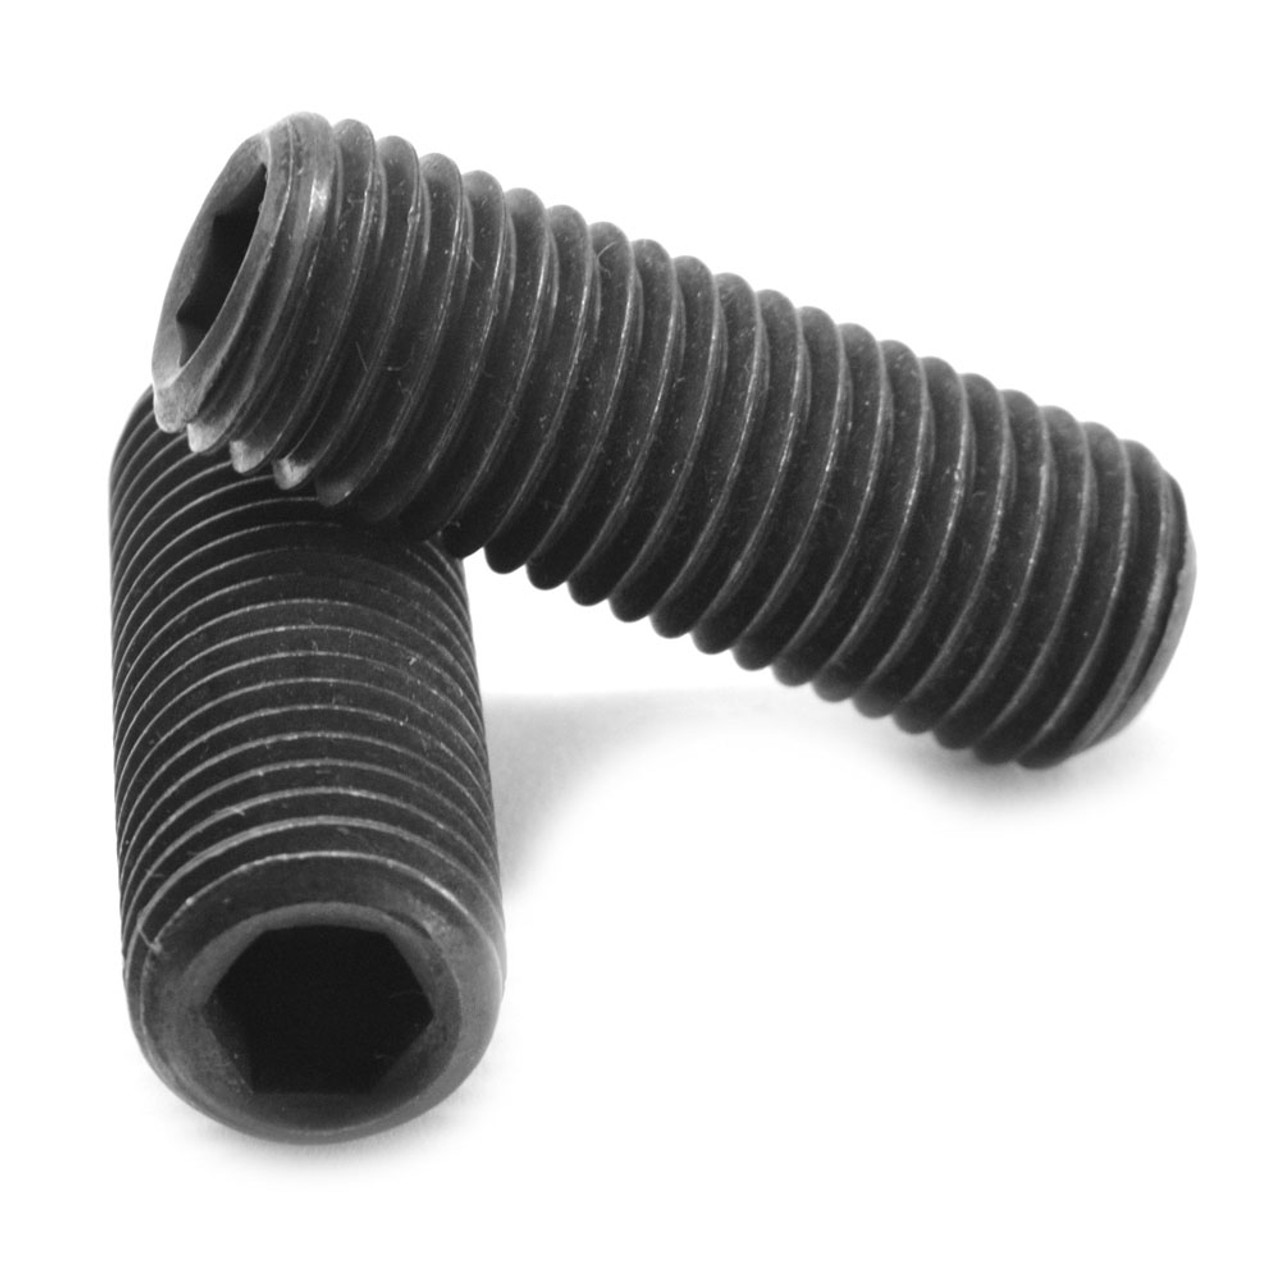 #12-24 x 1/2" Coarse Thread Socket Set Screw Cup Point Alloy Steel Black Oxide